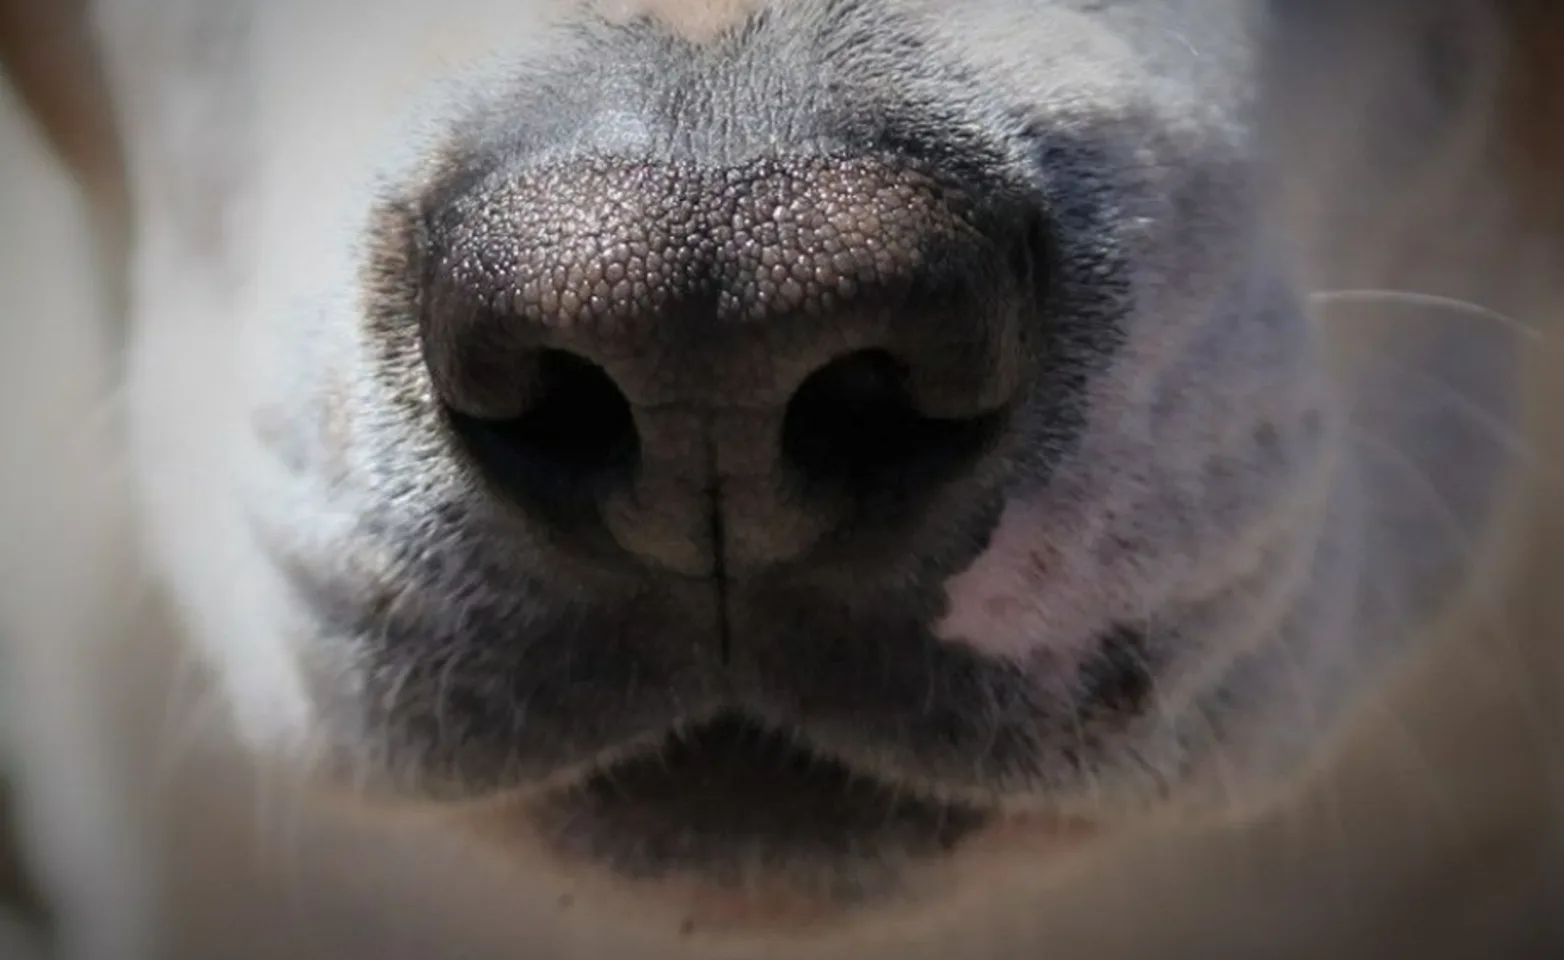 A close up image of a dog's nose